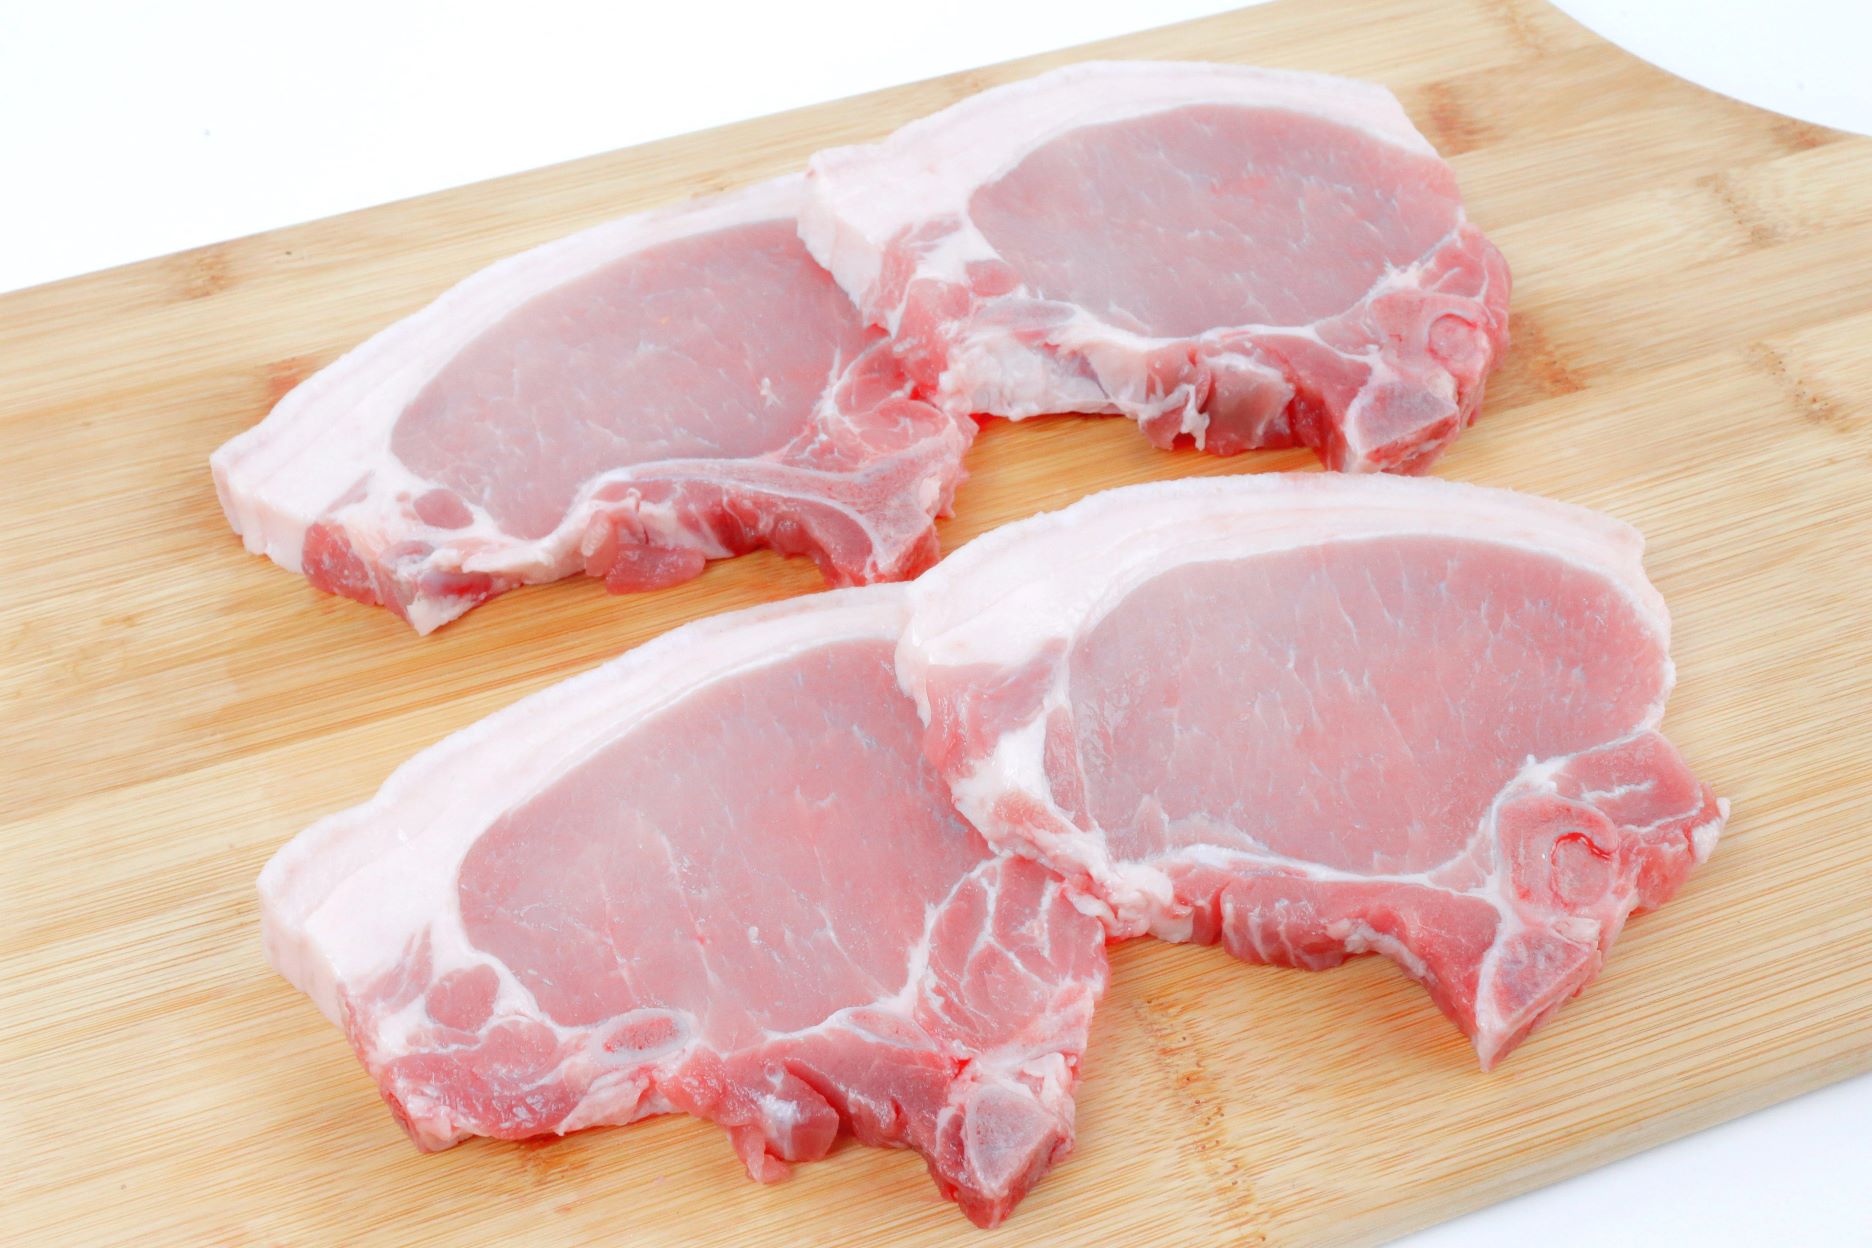 11-pork-chop-nutritional-facts